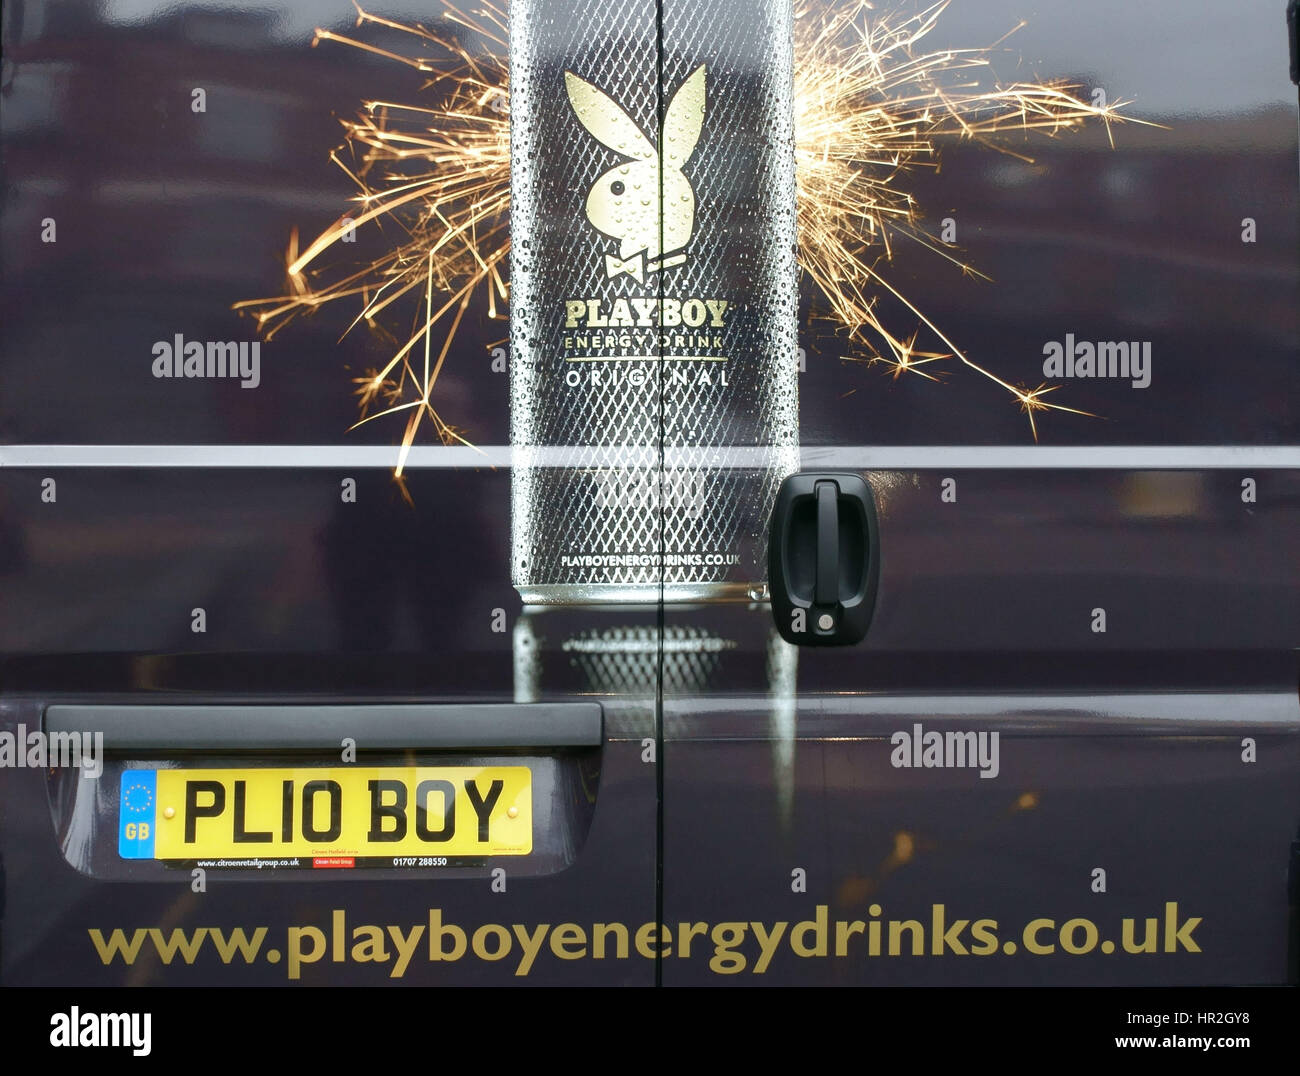 Playboy Marke Energie Getränk Werbe Fahrzeug, London Stockfoto